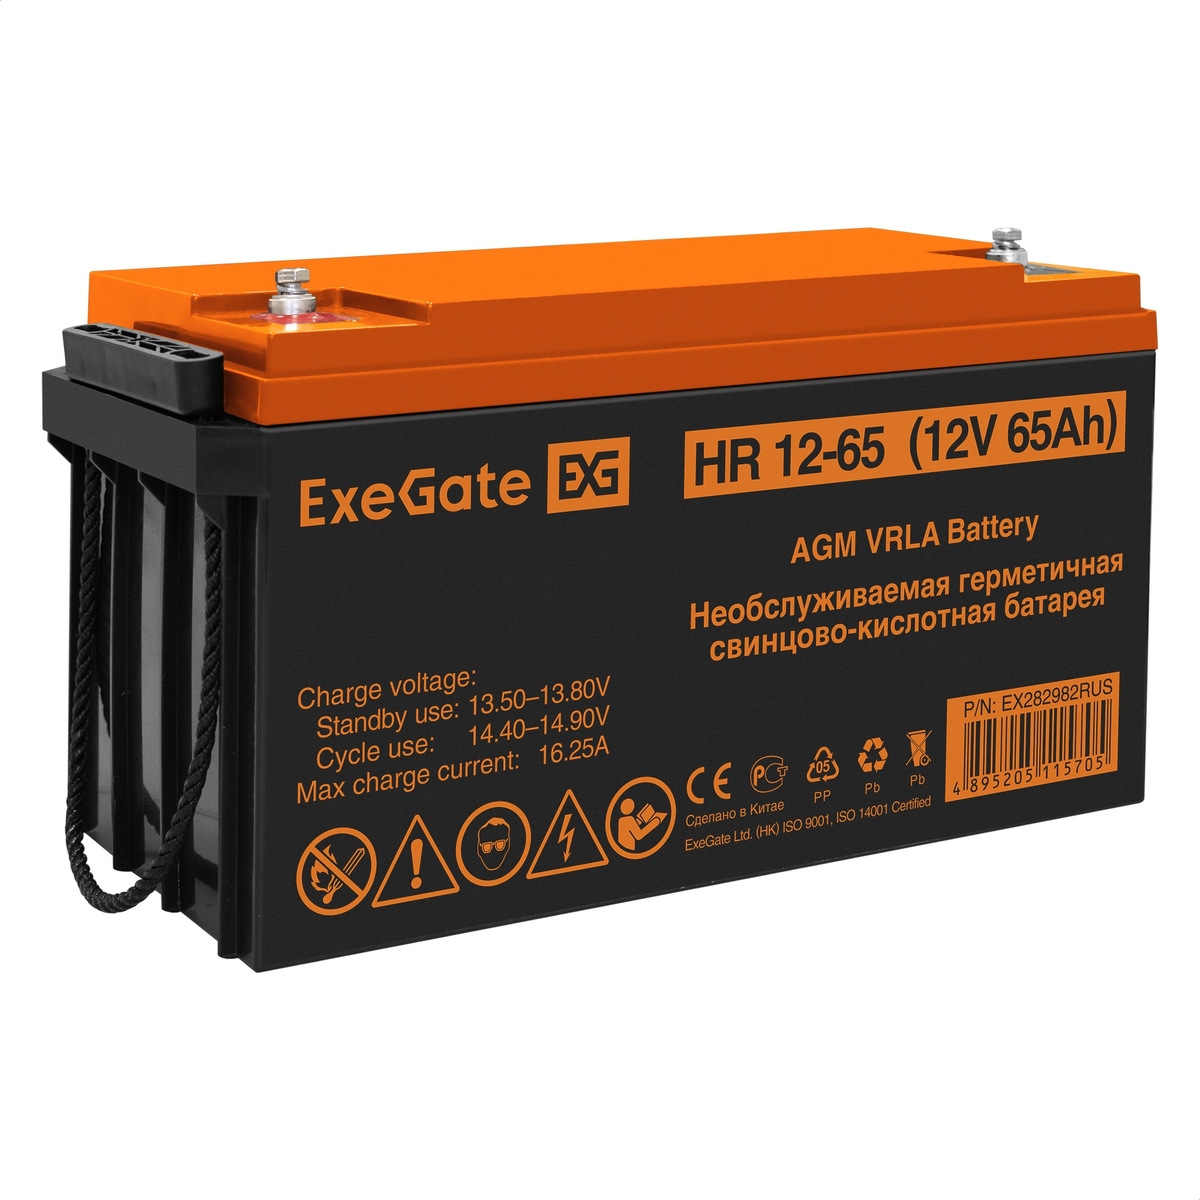 UPS set EX295996 + battery 65Ah EX282982 1 piece